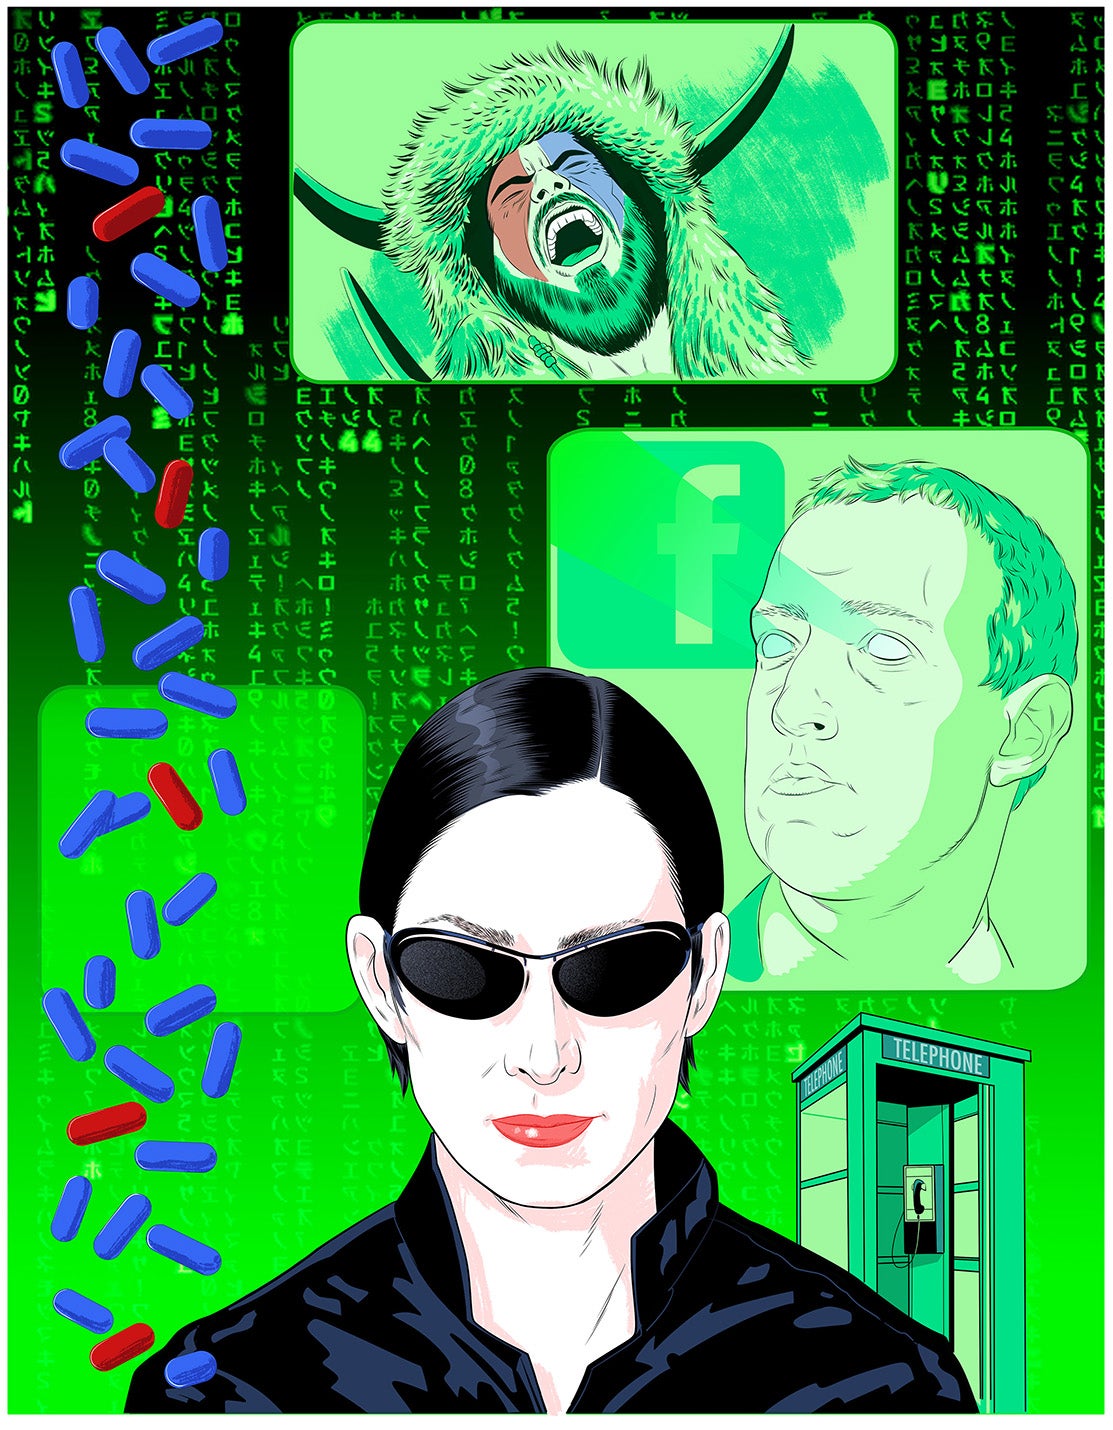 How The Matrix made us